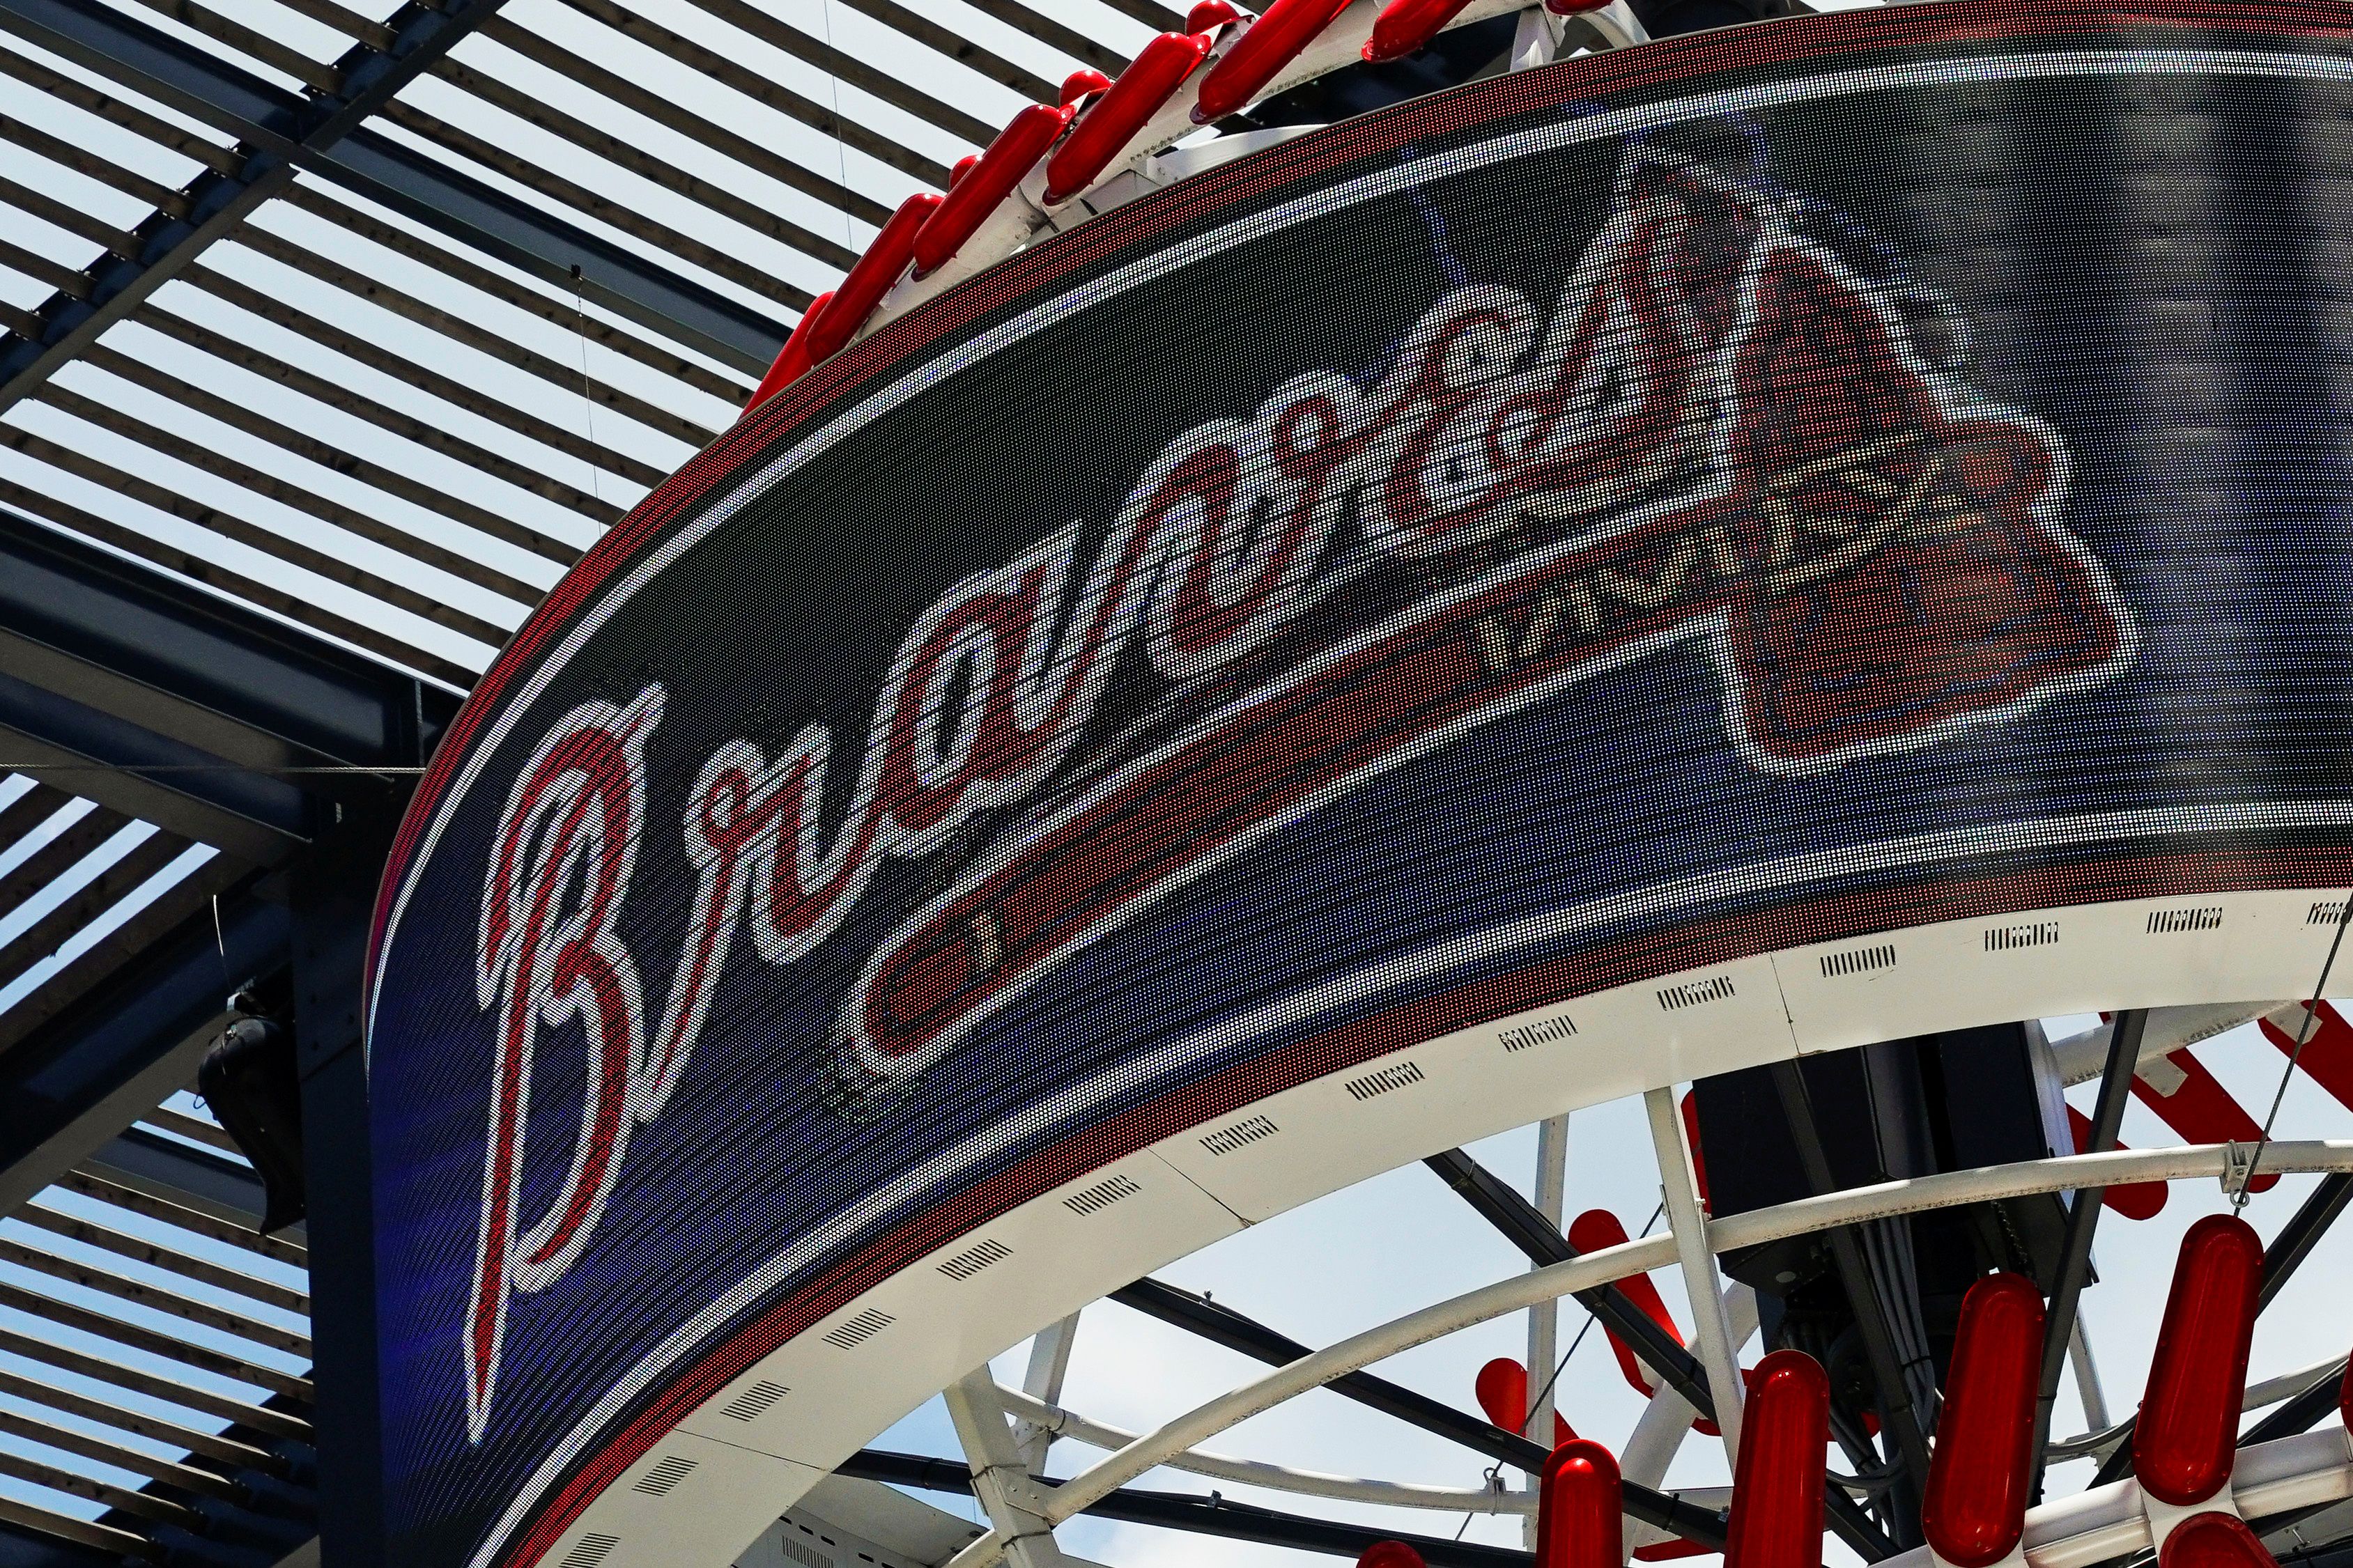 MLB explains why Atlanta Braves can keep name, tomahawk chop